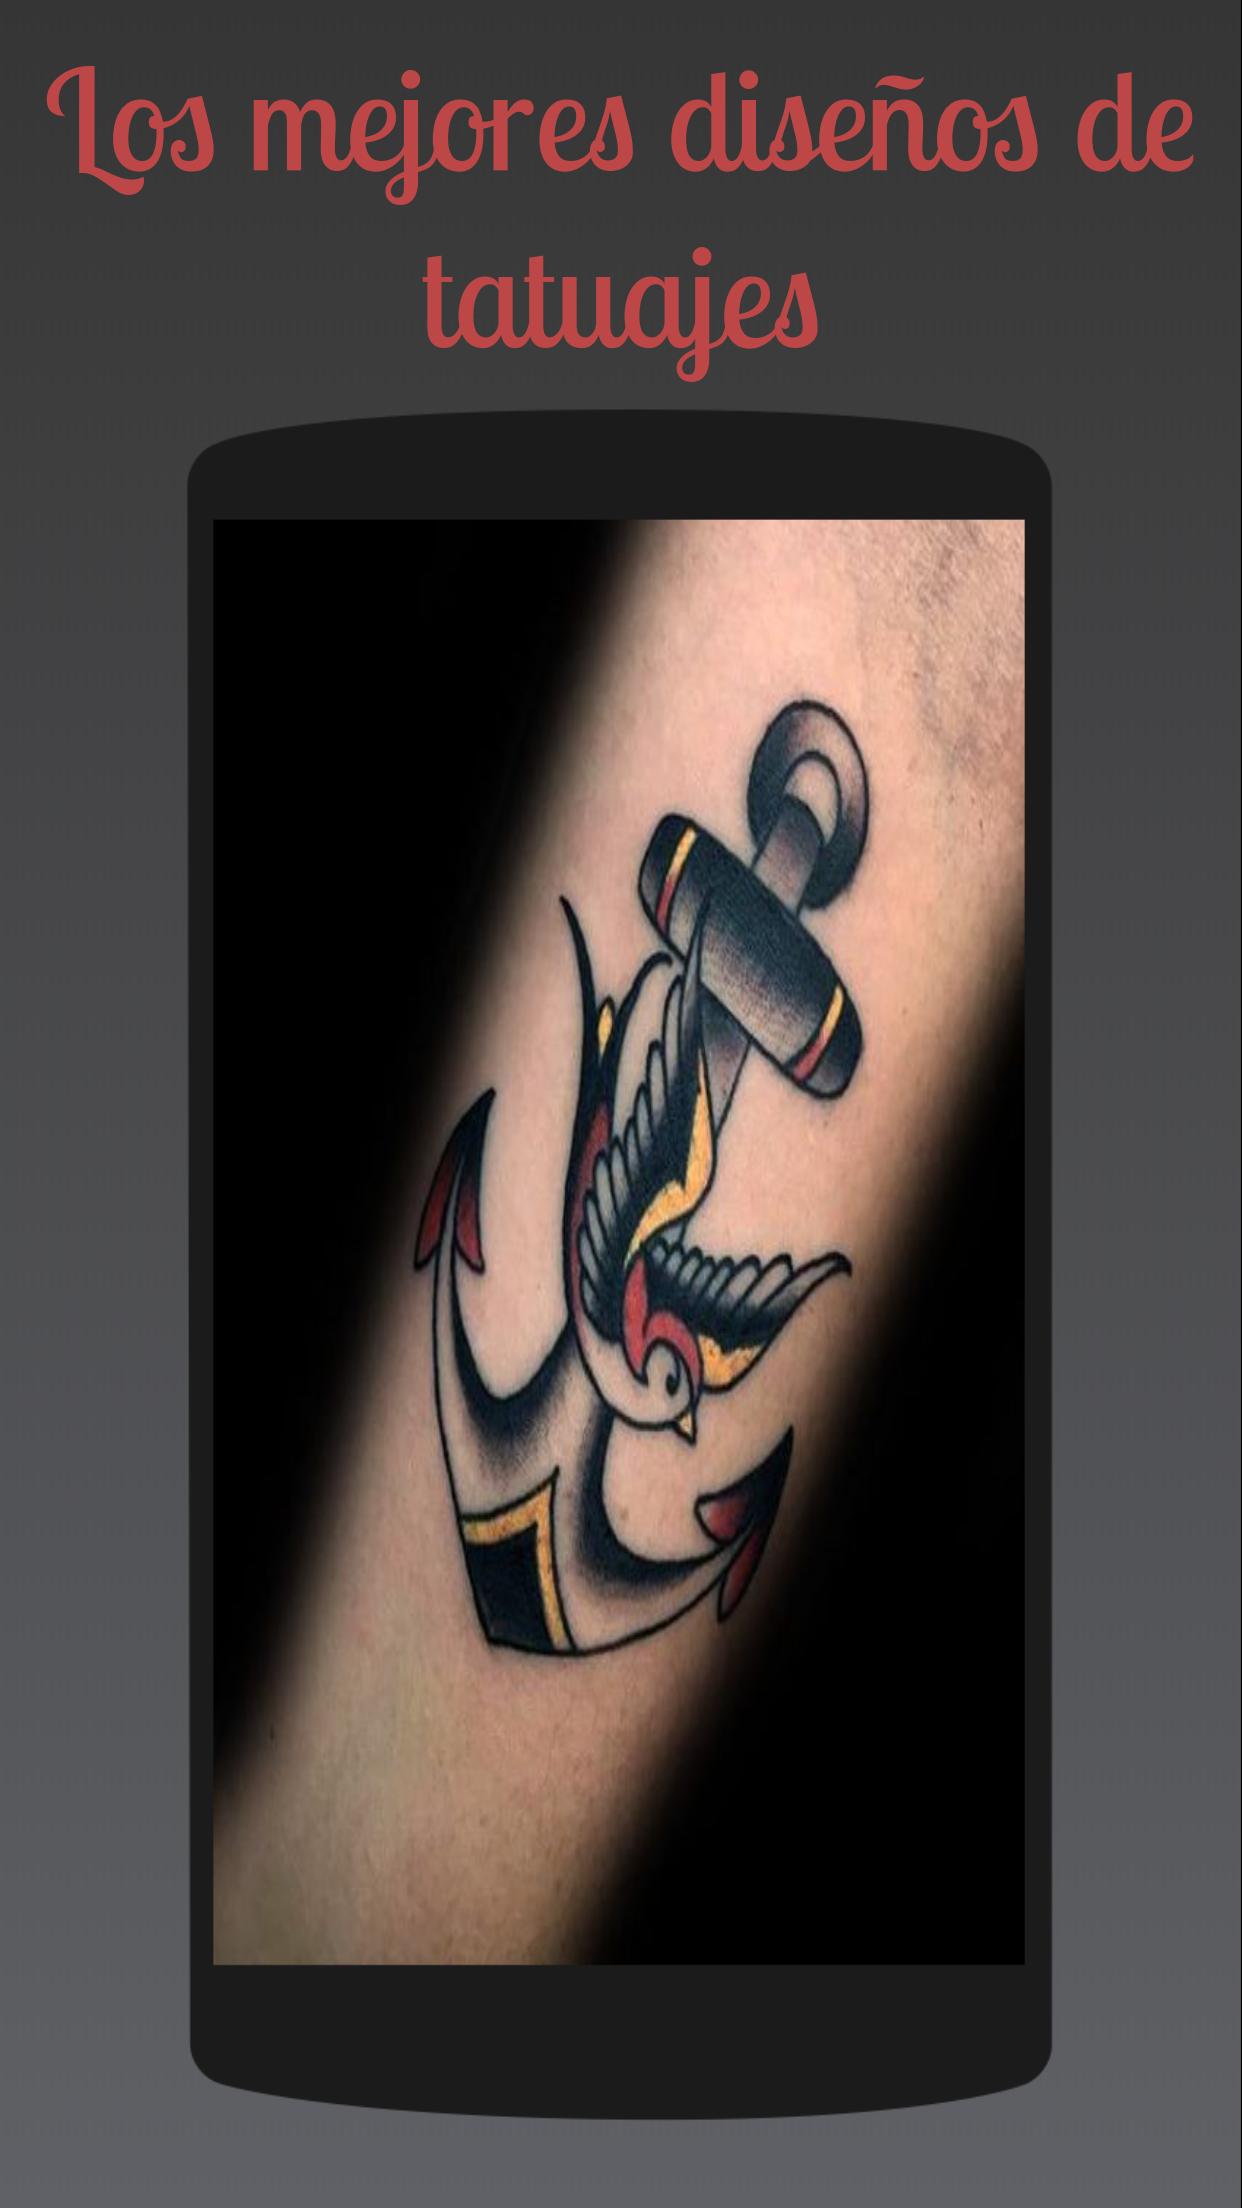 1000 ideas de tatuajes: Tatto Gallery 1.1 Screenshot 4